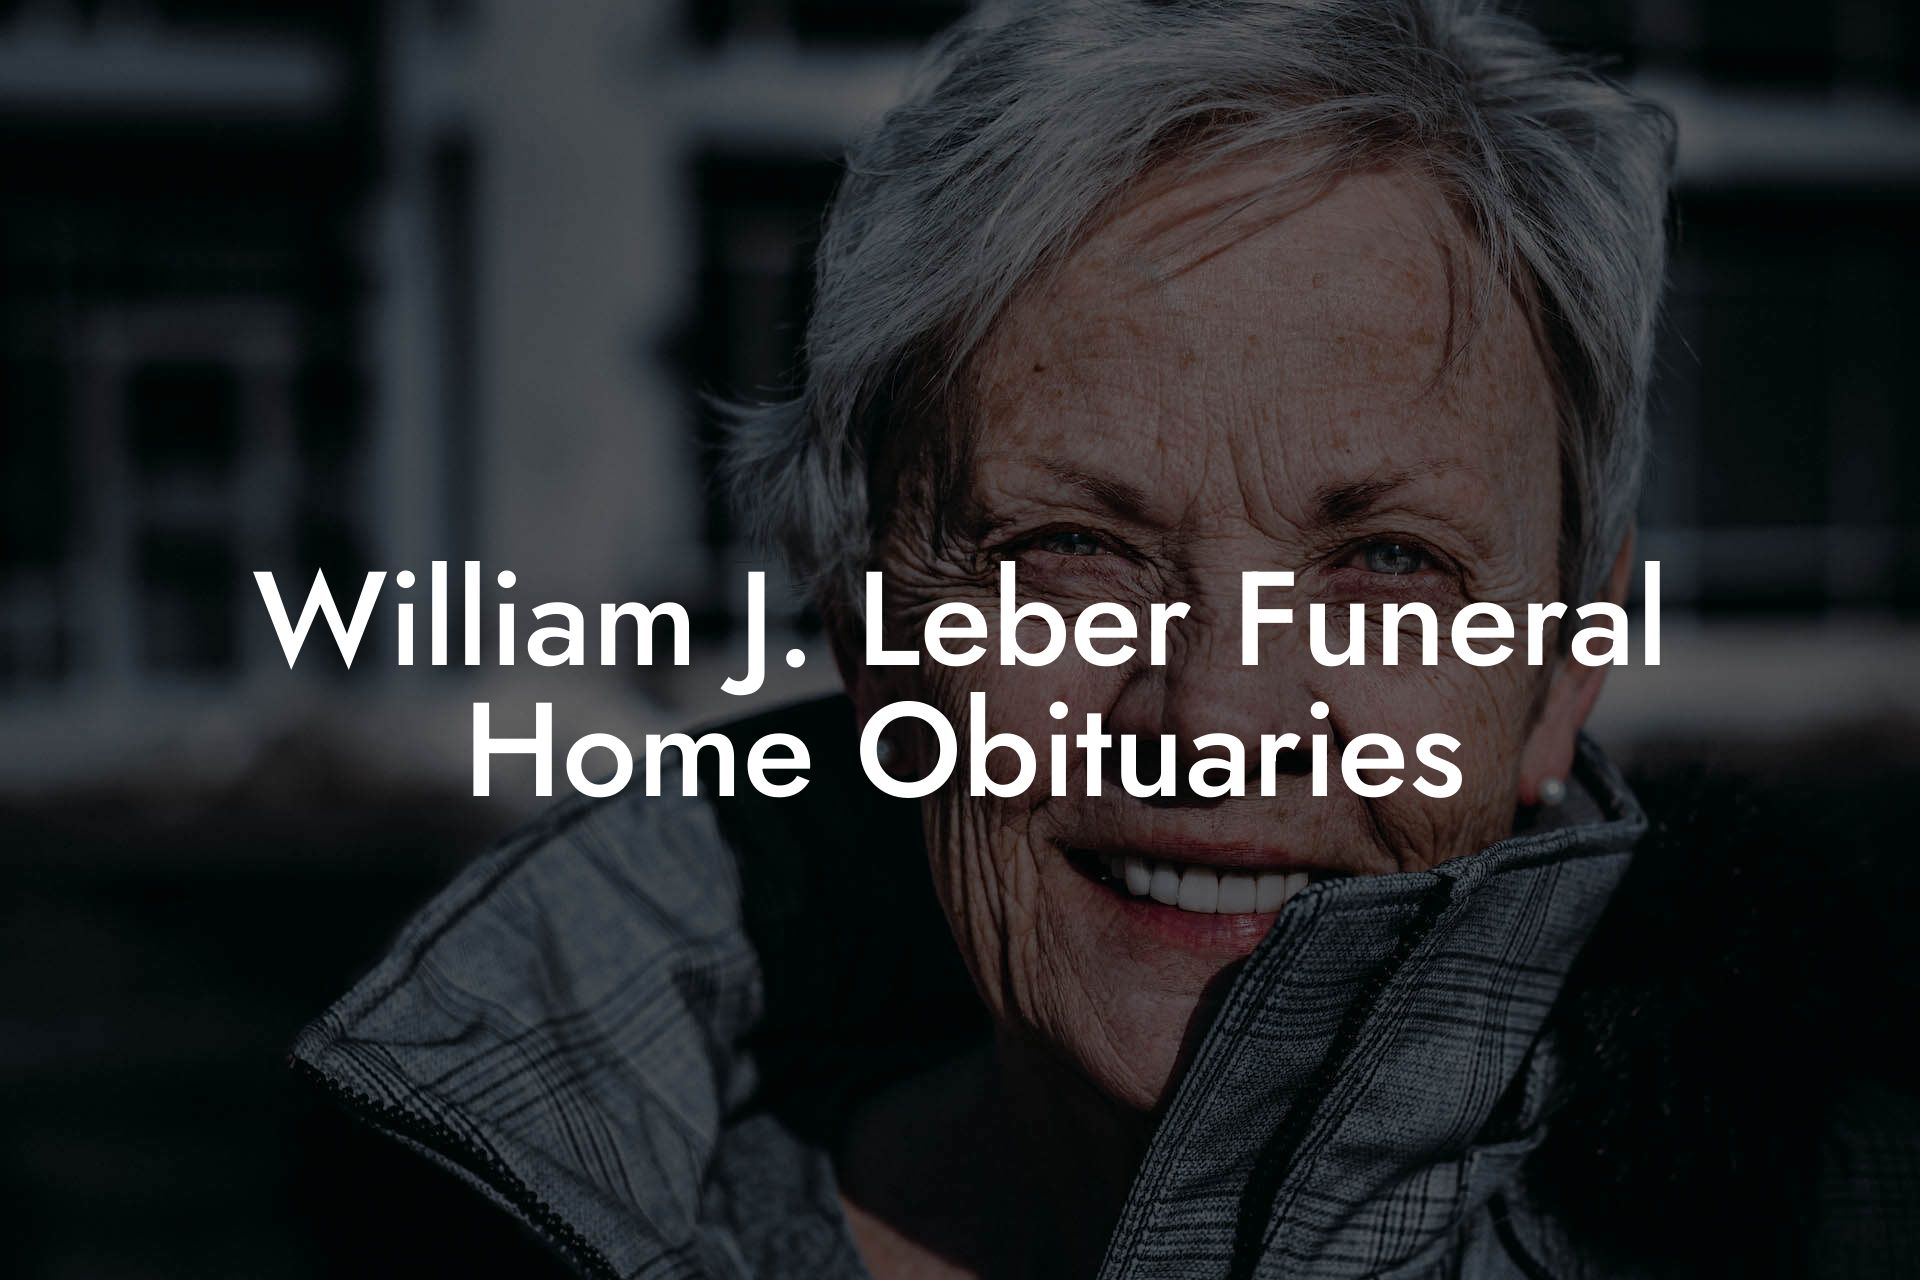 William J. Leber Funeral Home Obituaries